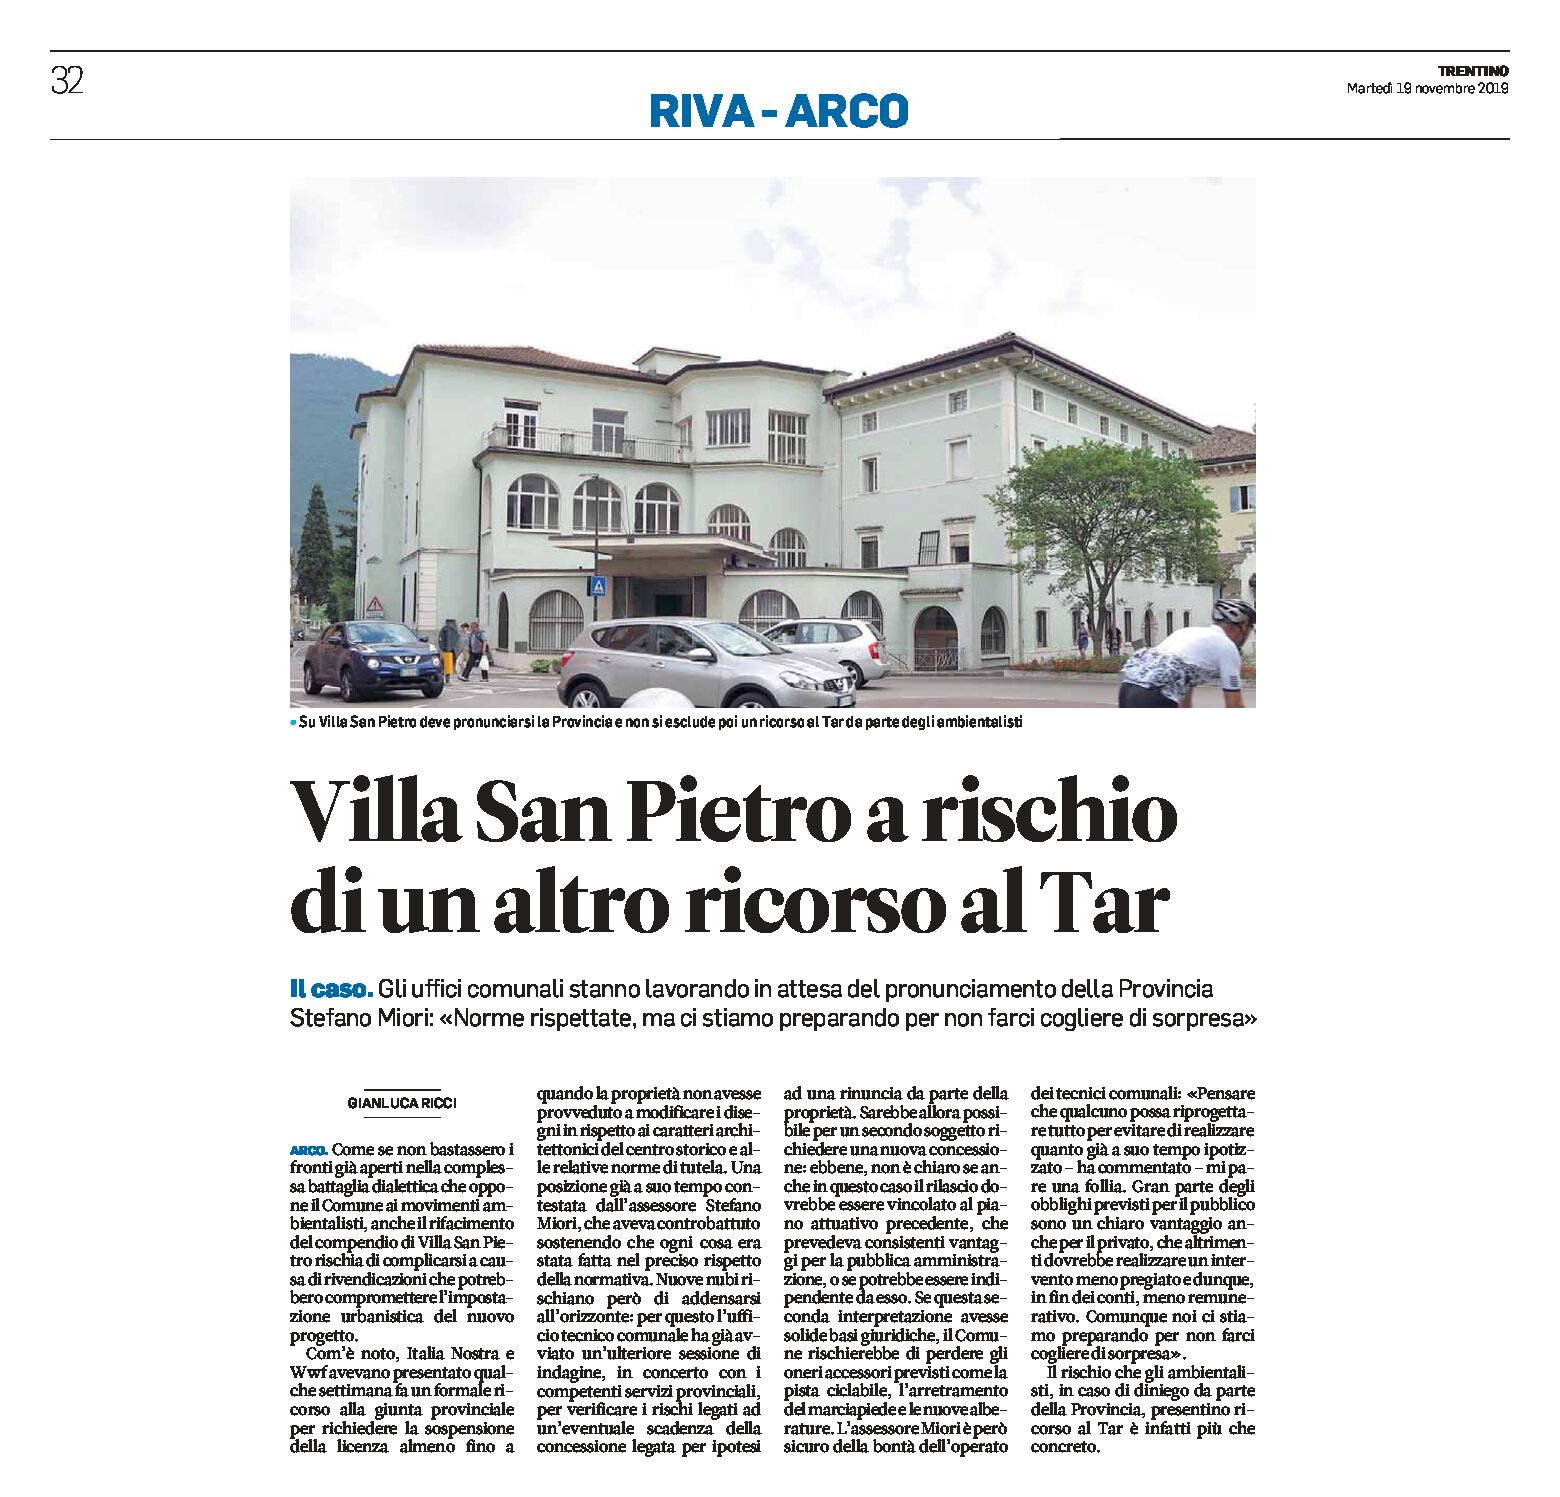 Arco, Villa San Pietro: rischio di un altro ricorso al Tar